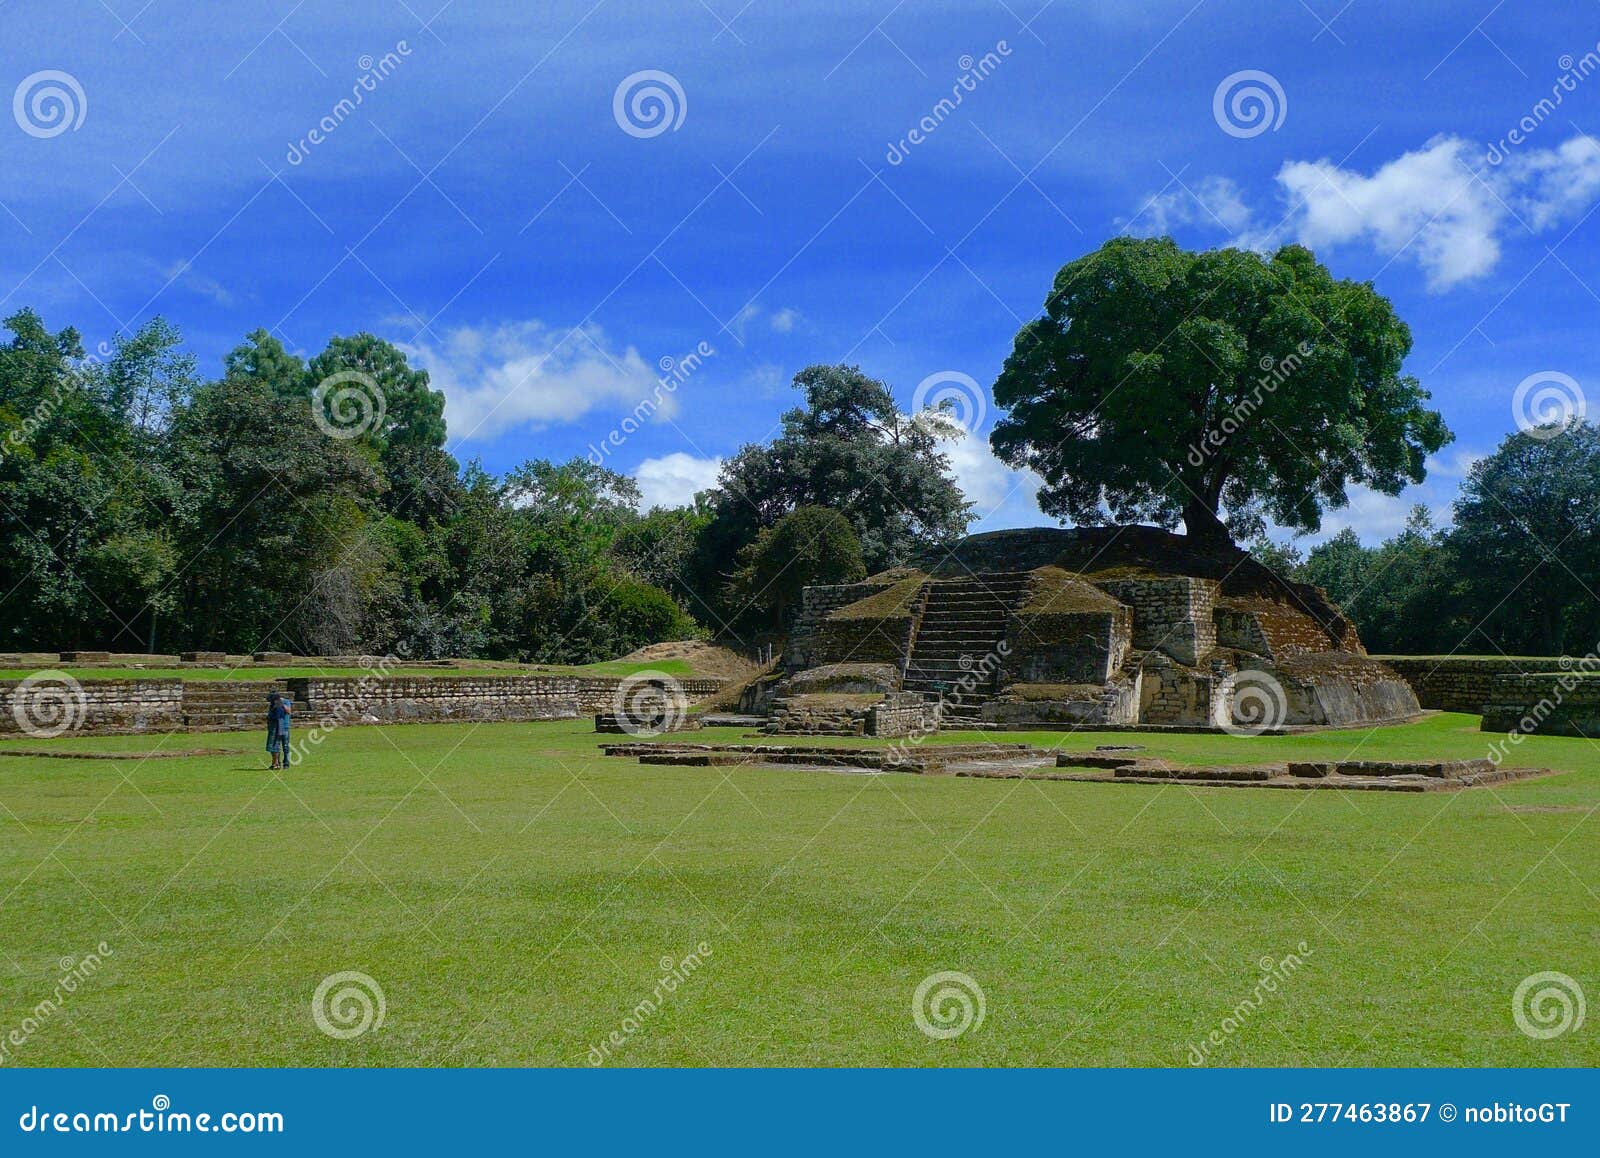 iximche mayan ruins in tecpÃÂ¡n, guatemala